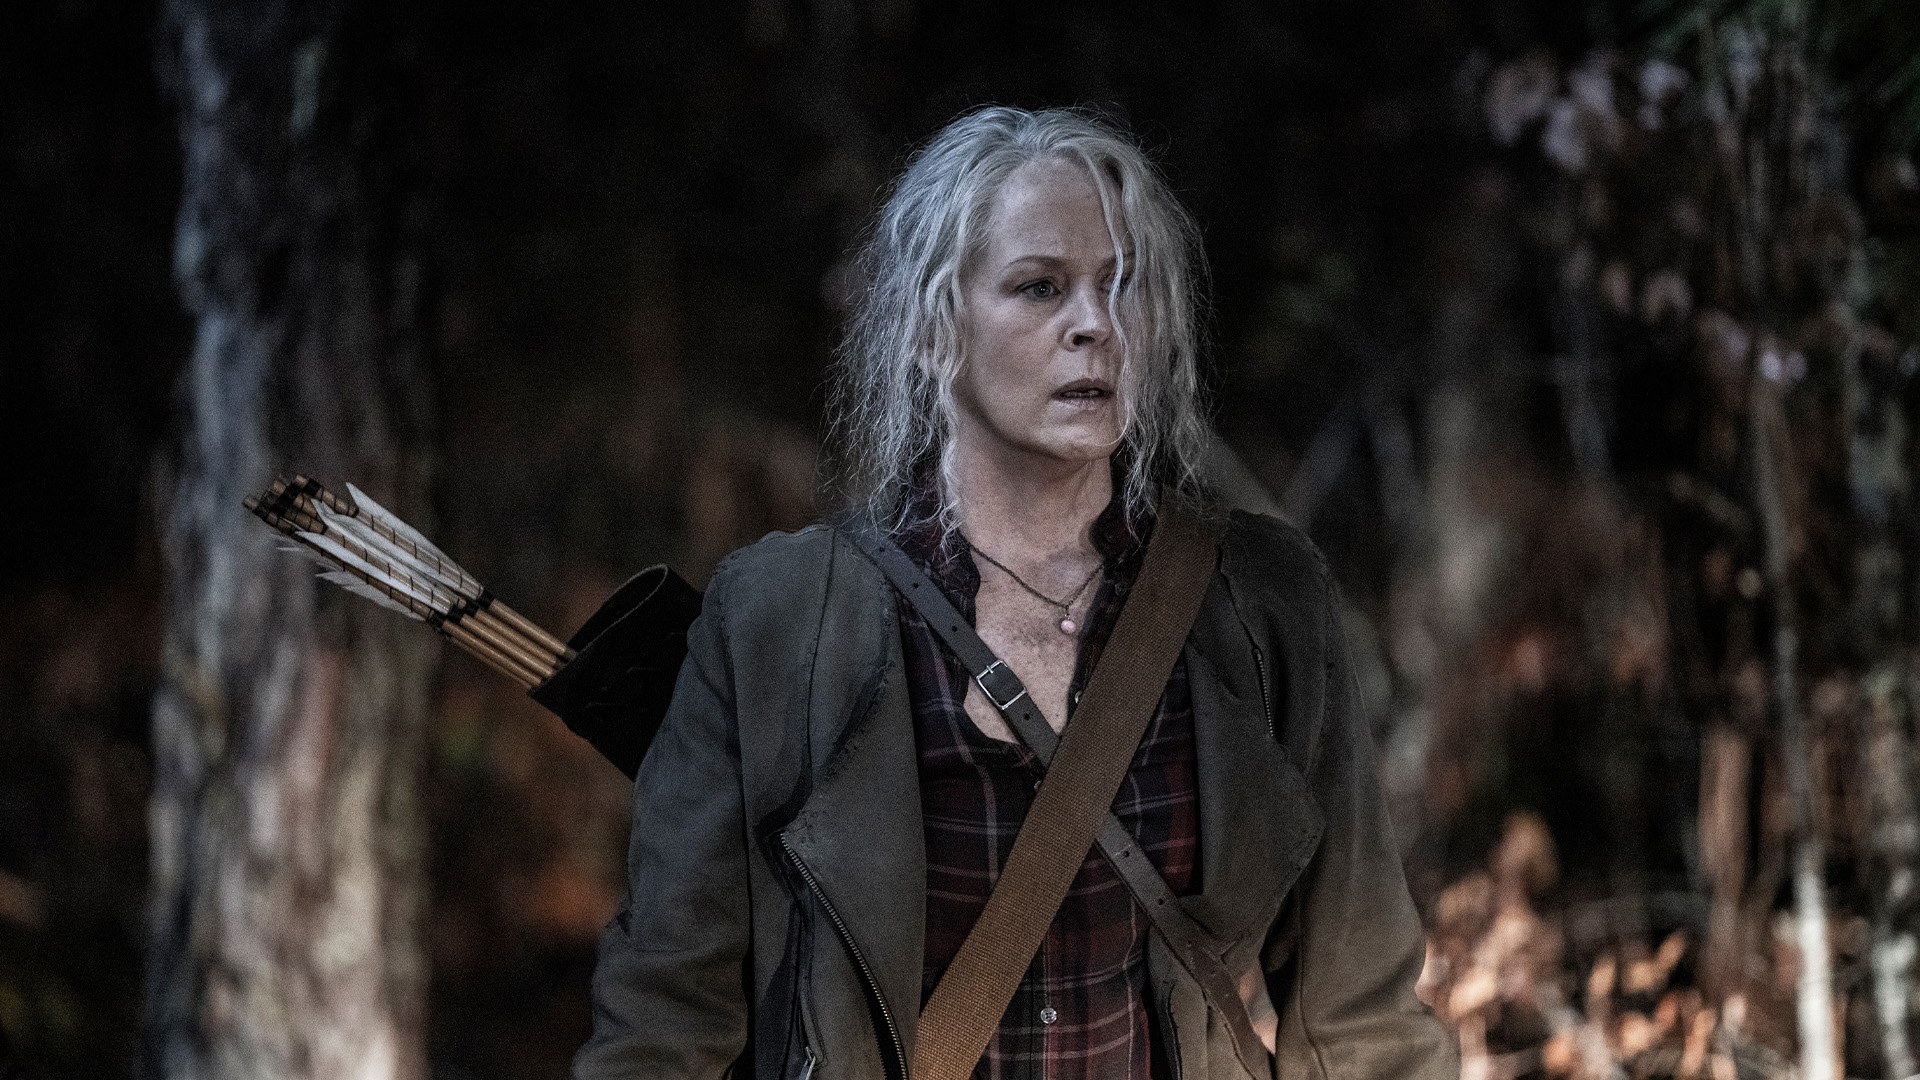 The Walking Dead: Best of Carol Season 1 Episode 6 - What's Been Lost: Best of Carol Edition